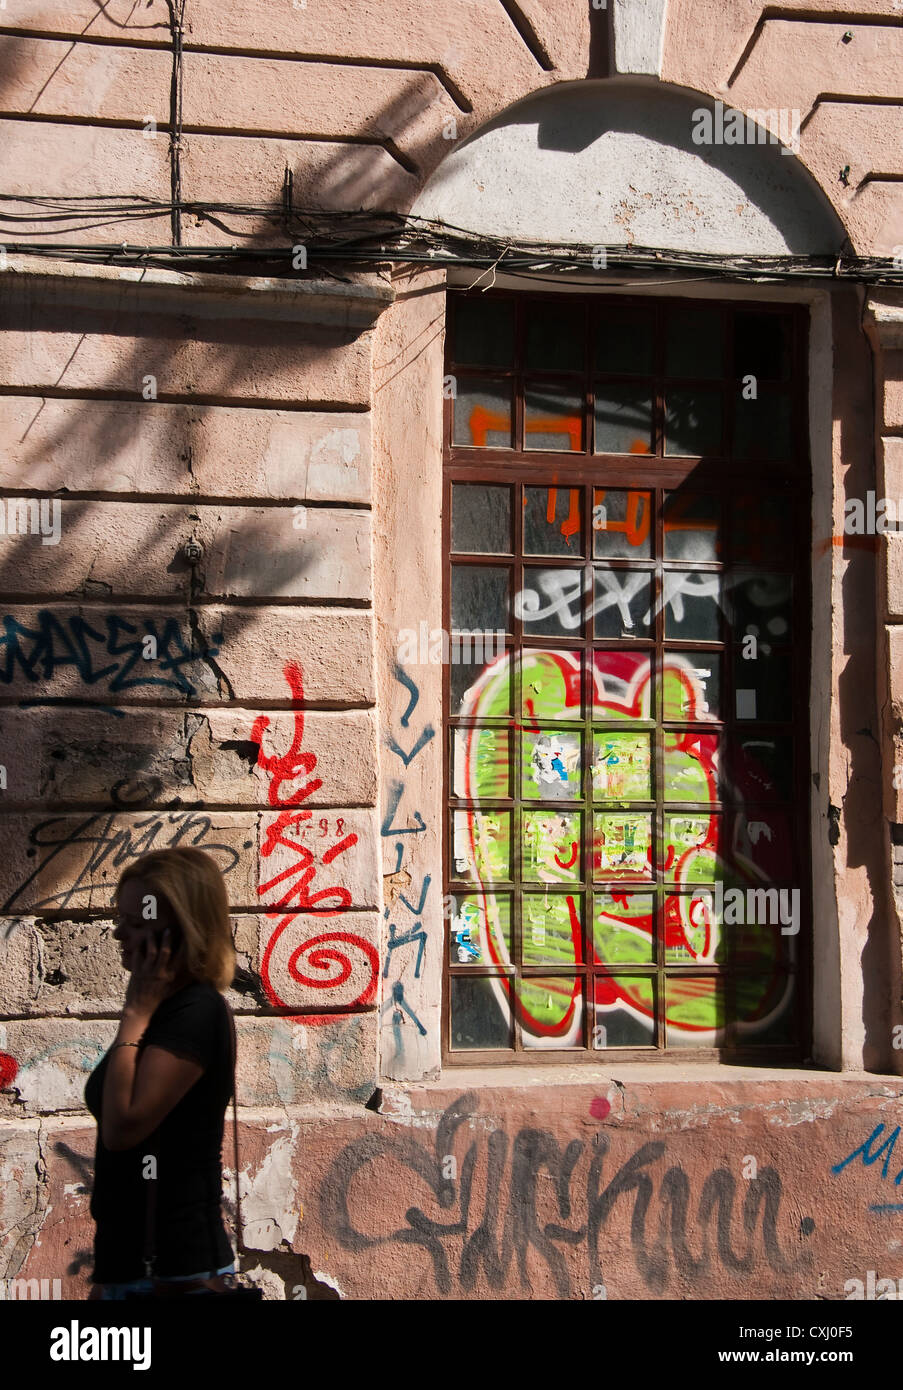 Grafitti on walls in Odessa is plentiful. Stock Photo